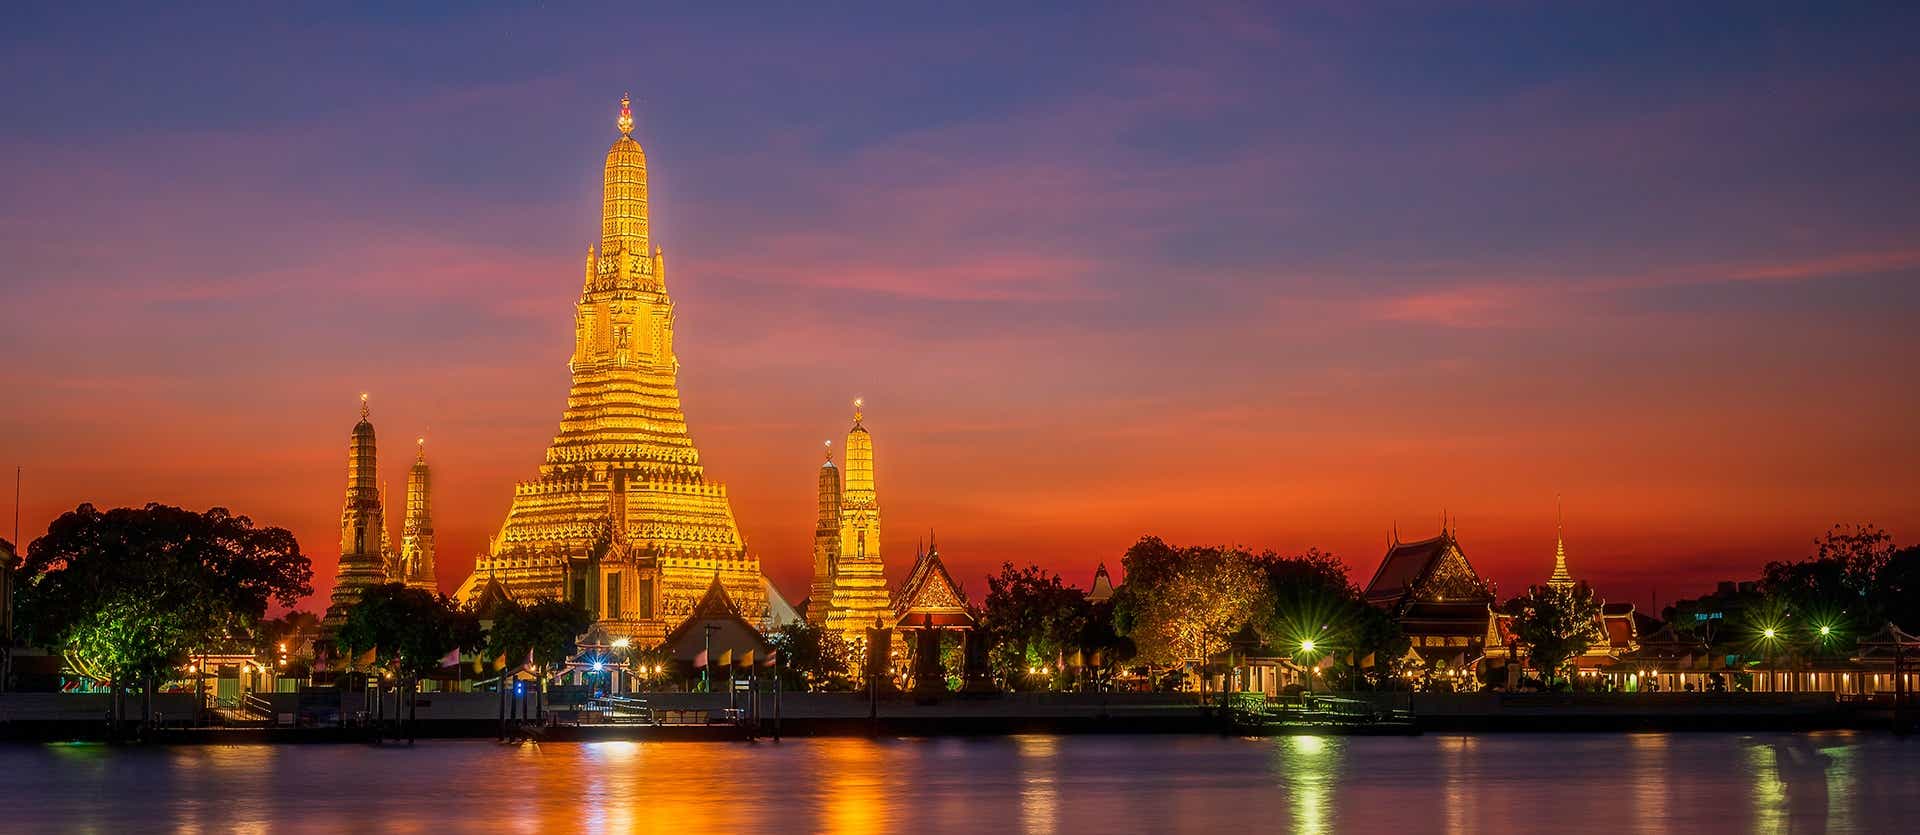 Wat Arun Temple at Sunset <span class="iconos separador"></span> Bangkok